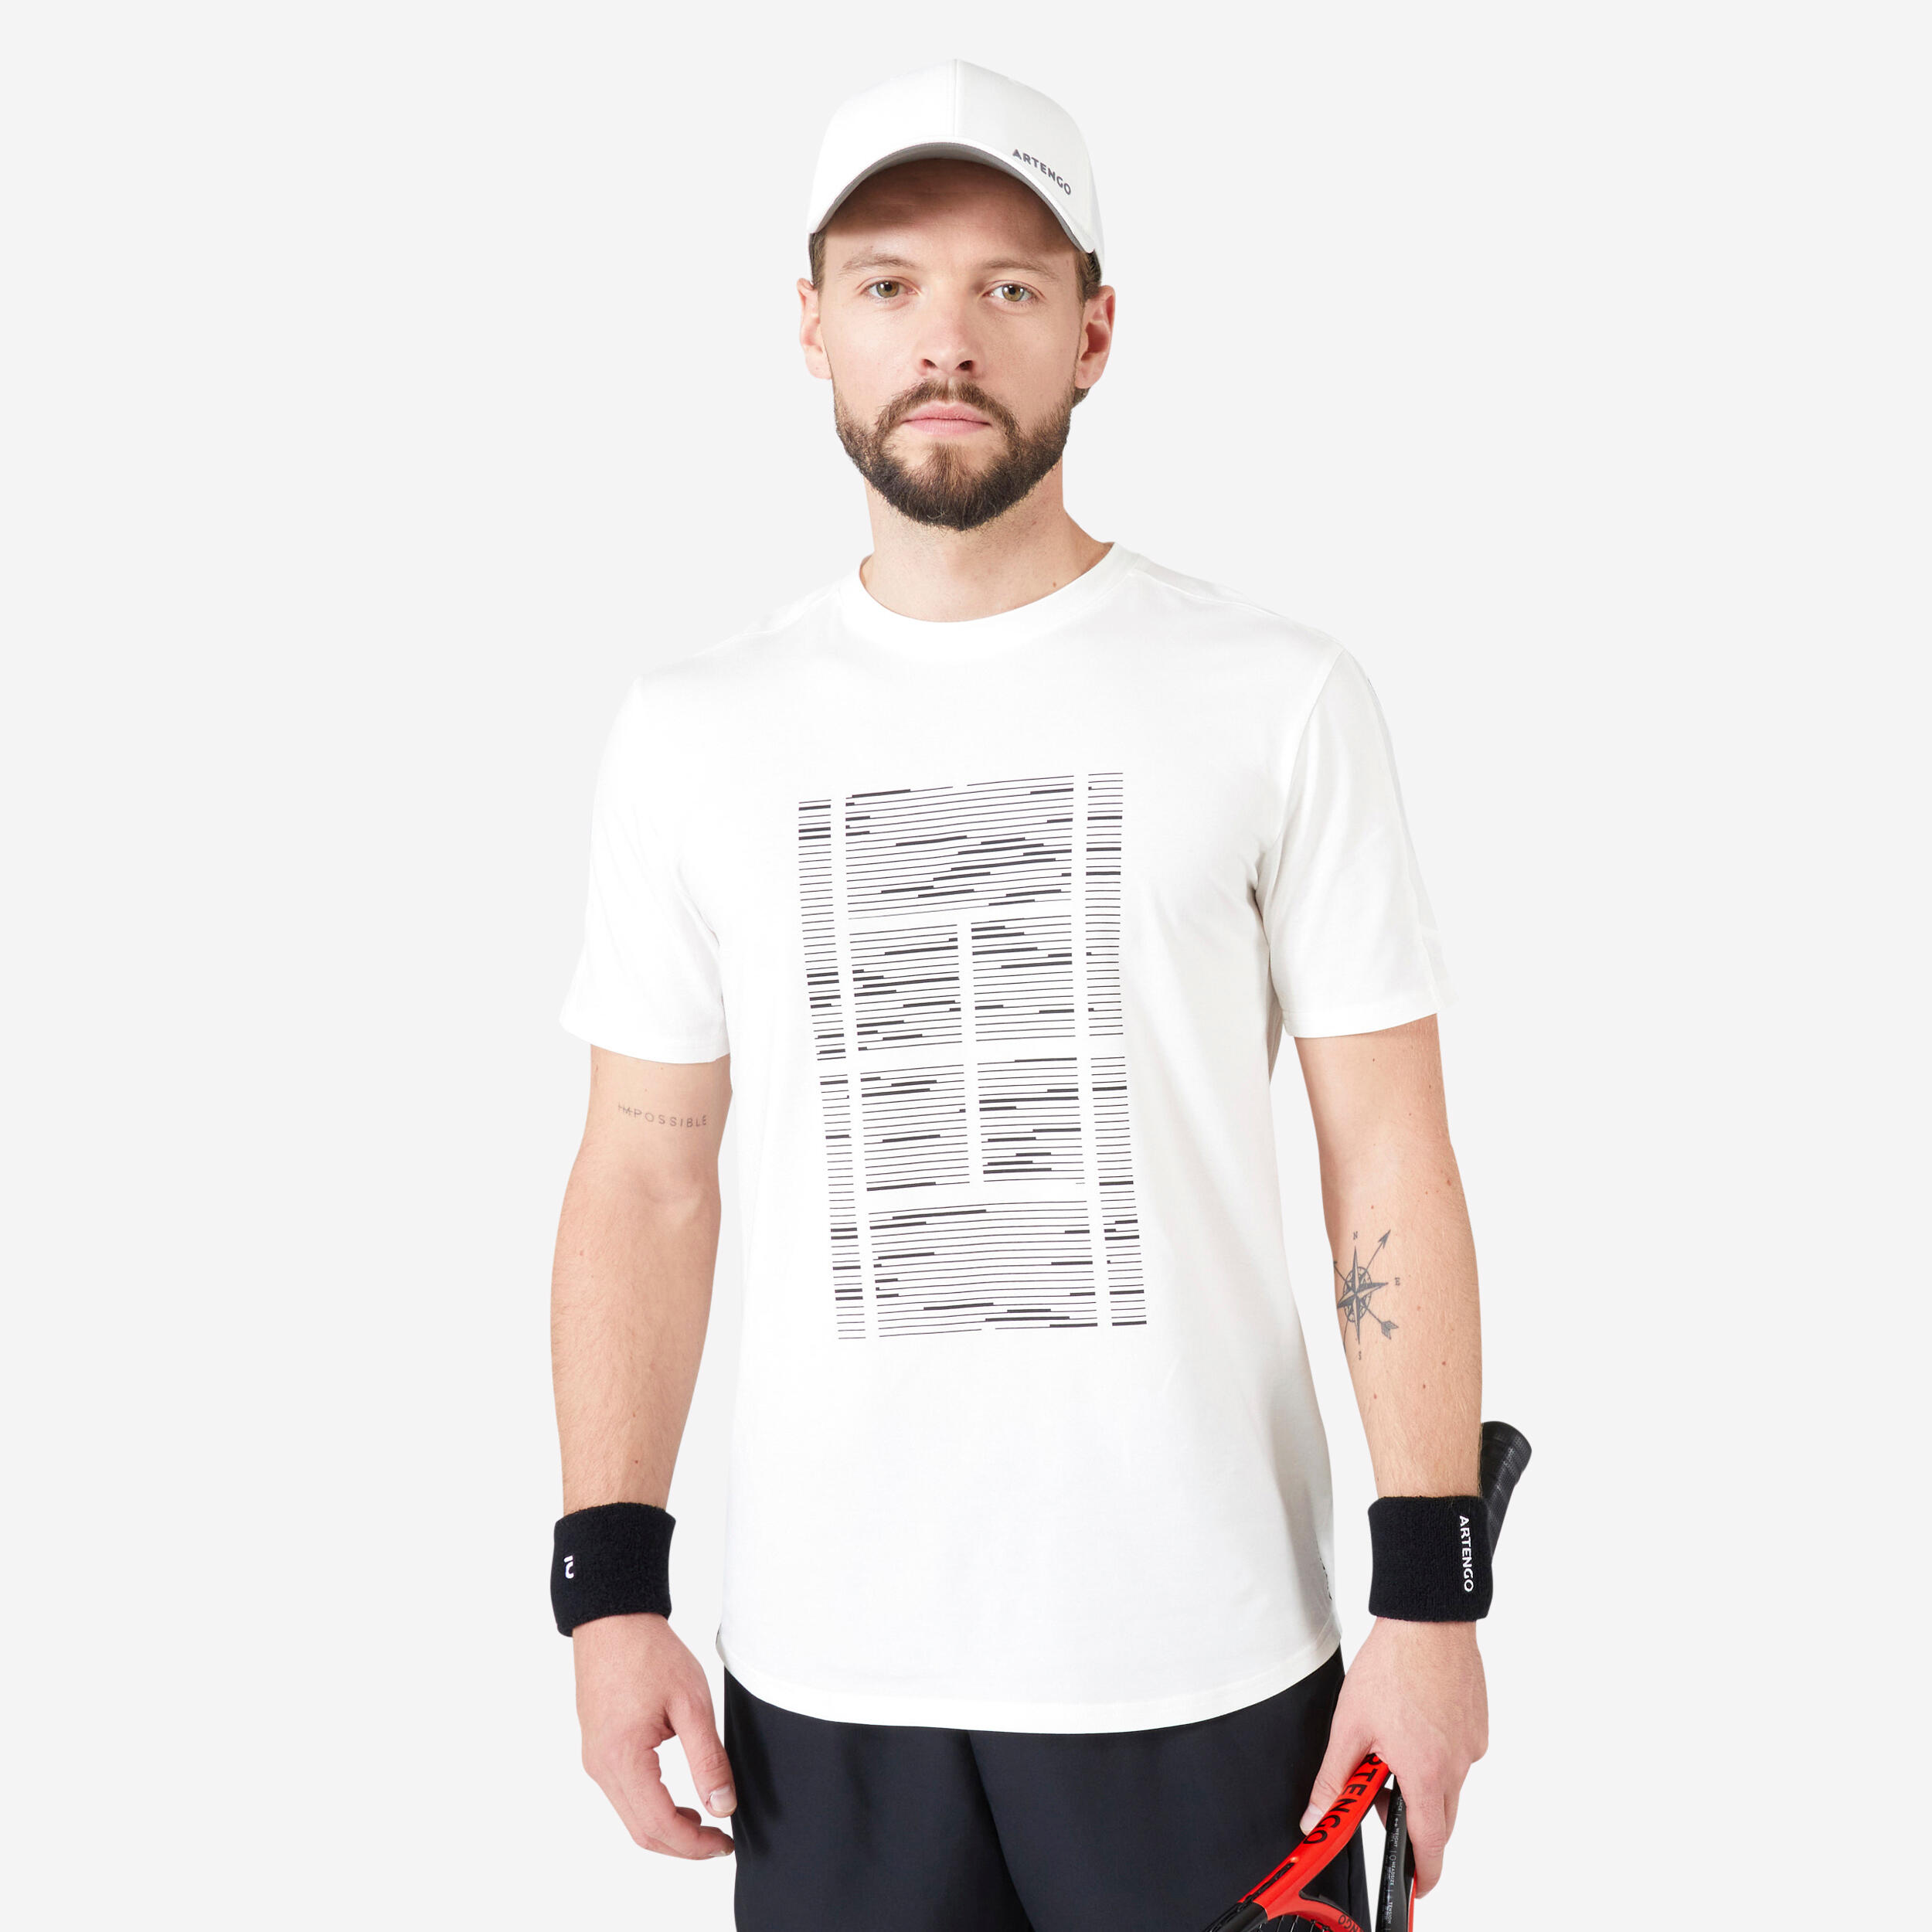 Decathlon | T-shirt tennis uomo SOFT bianca |  Artengo